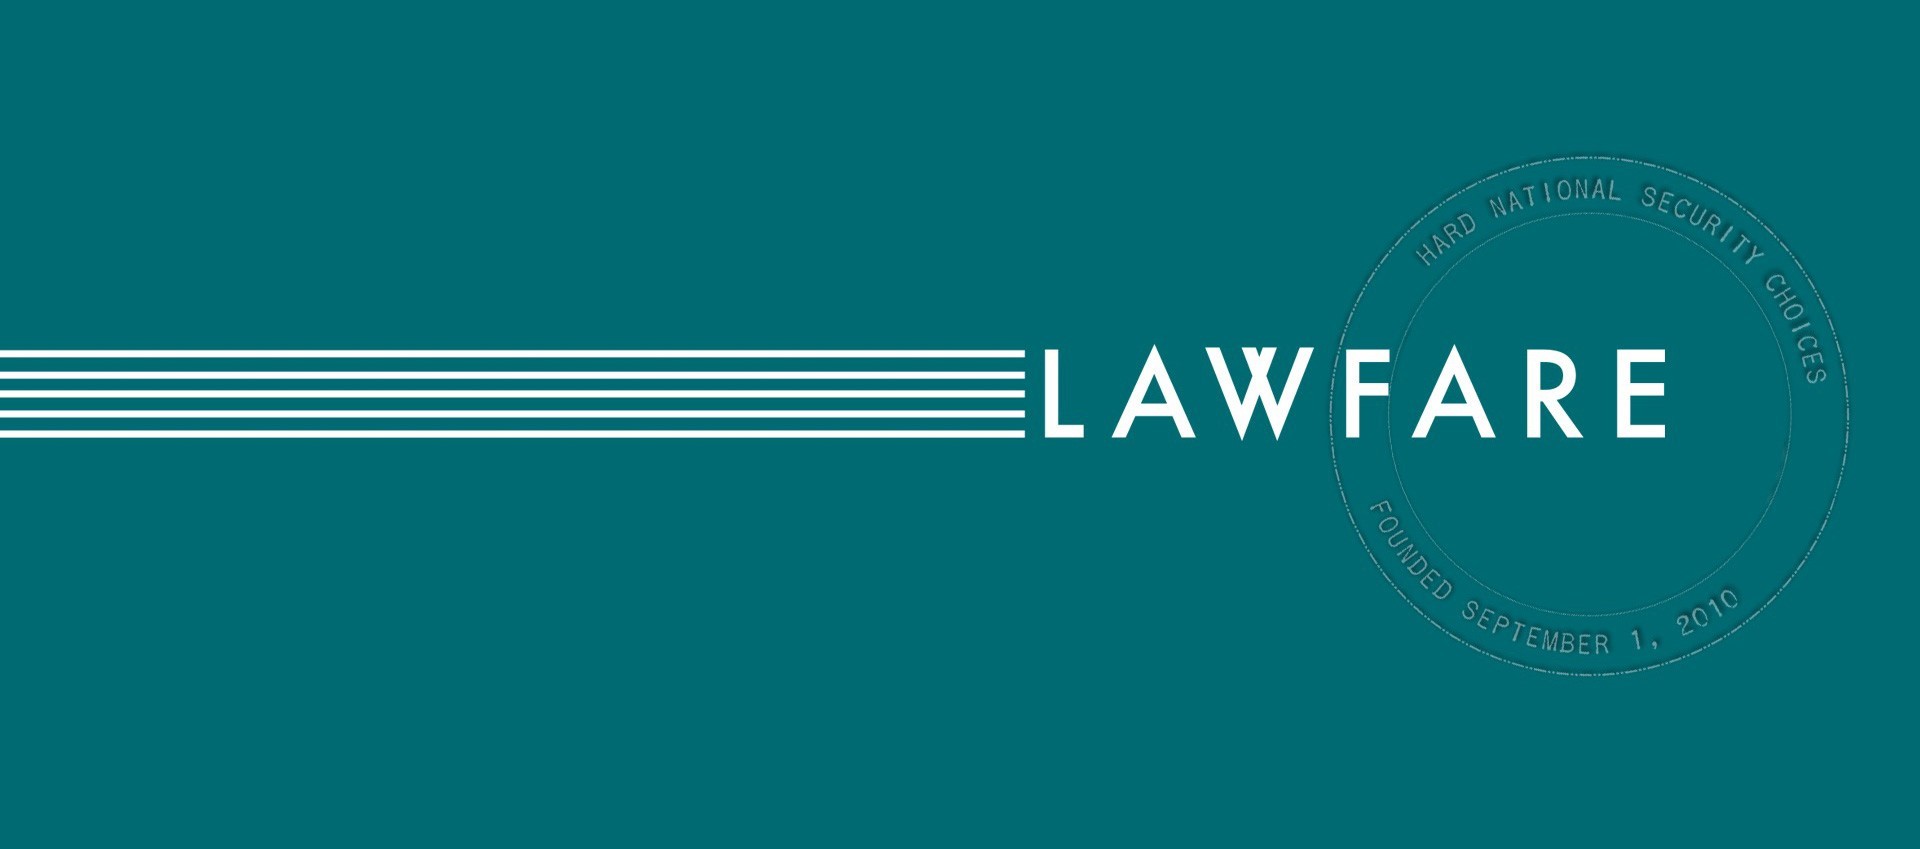 lawfare logo doc post_3_26